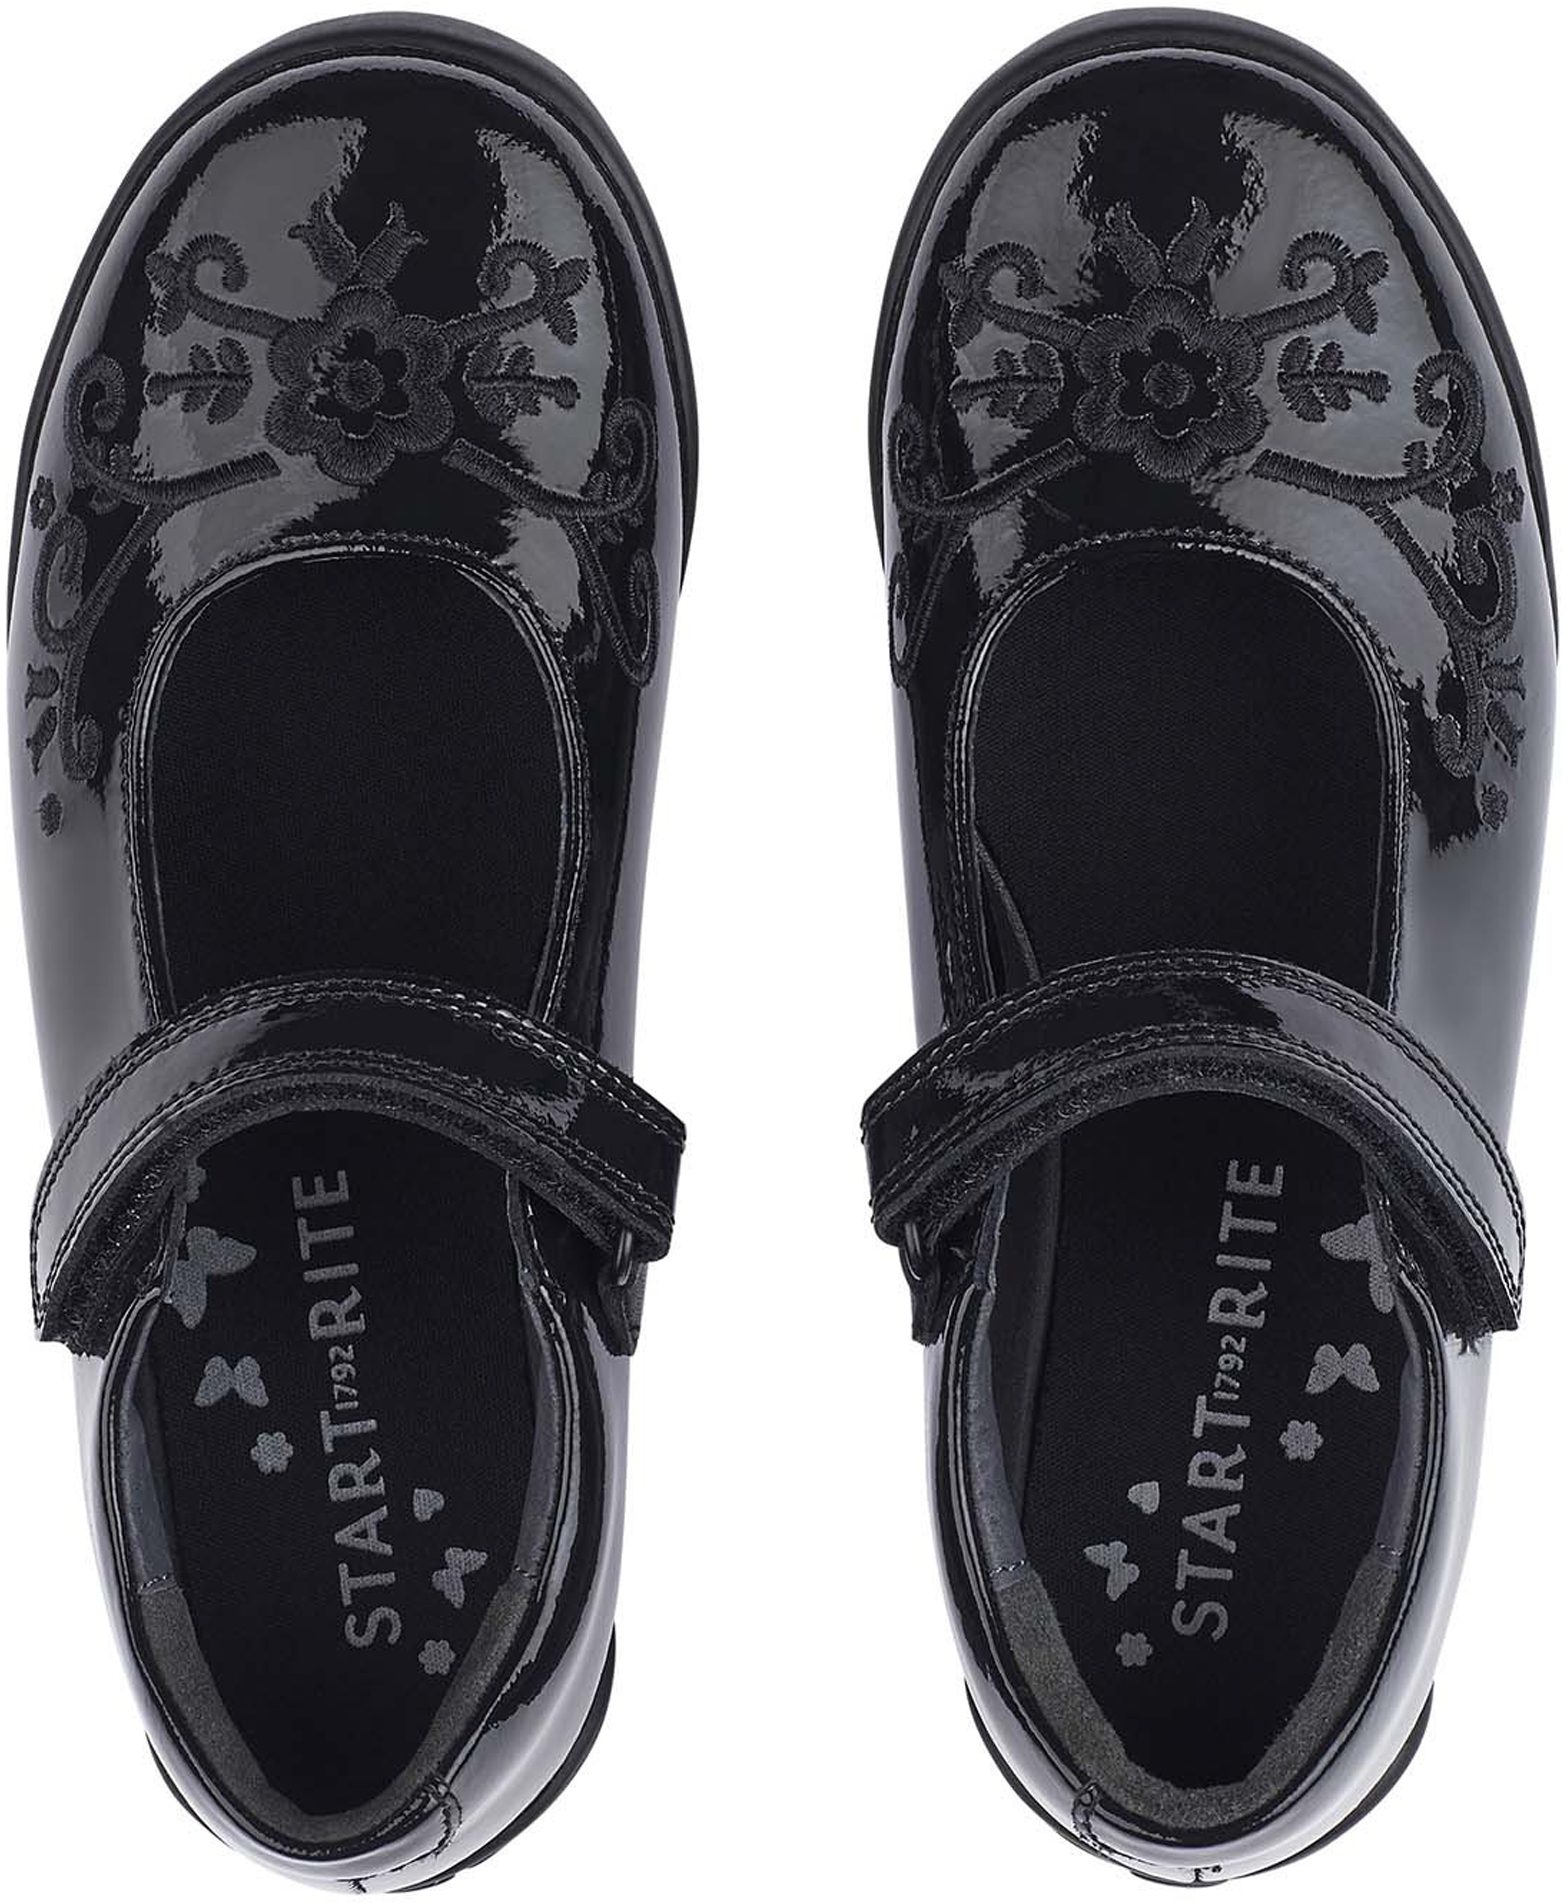 Start-Rite Hopscotch Black Patent 2788_3 - Girls School Shoes ...